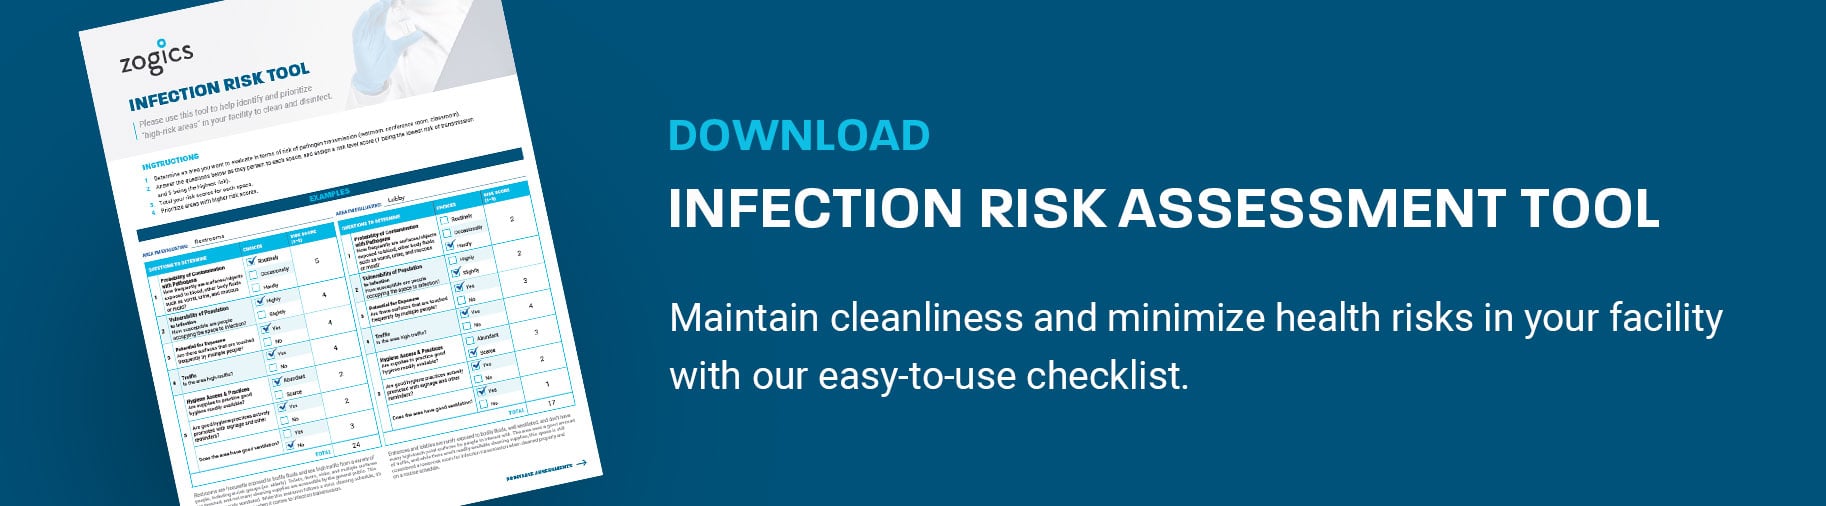 infection-risk-tool_download_blog-banner